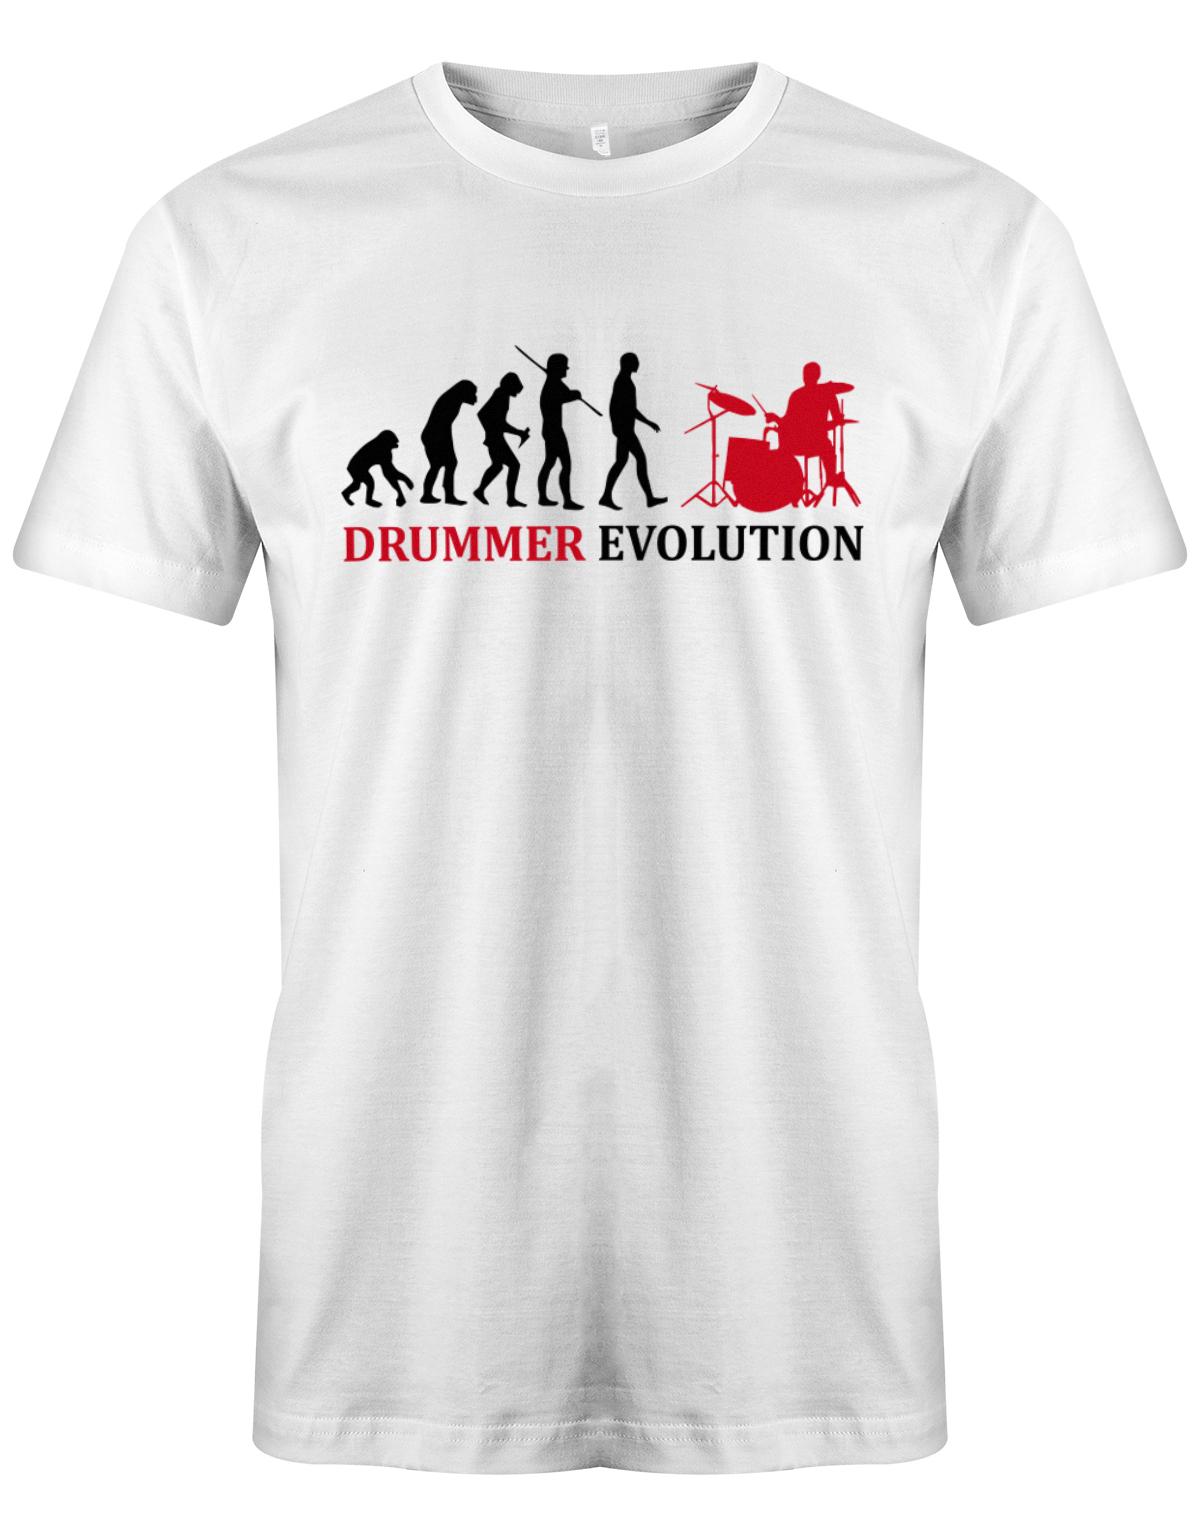 Drummer-Evolution-Herren-Shirt-Weiss